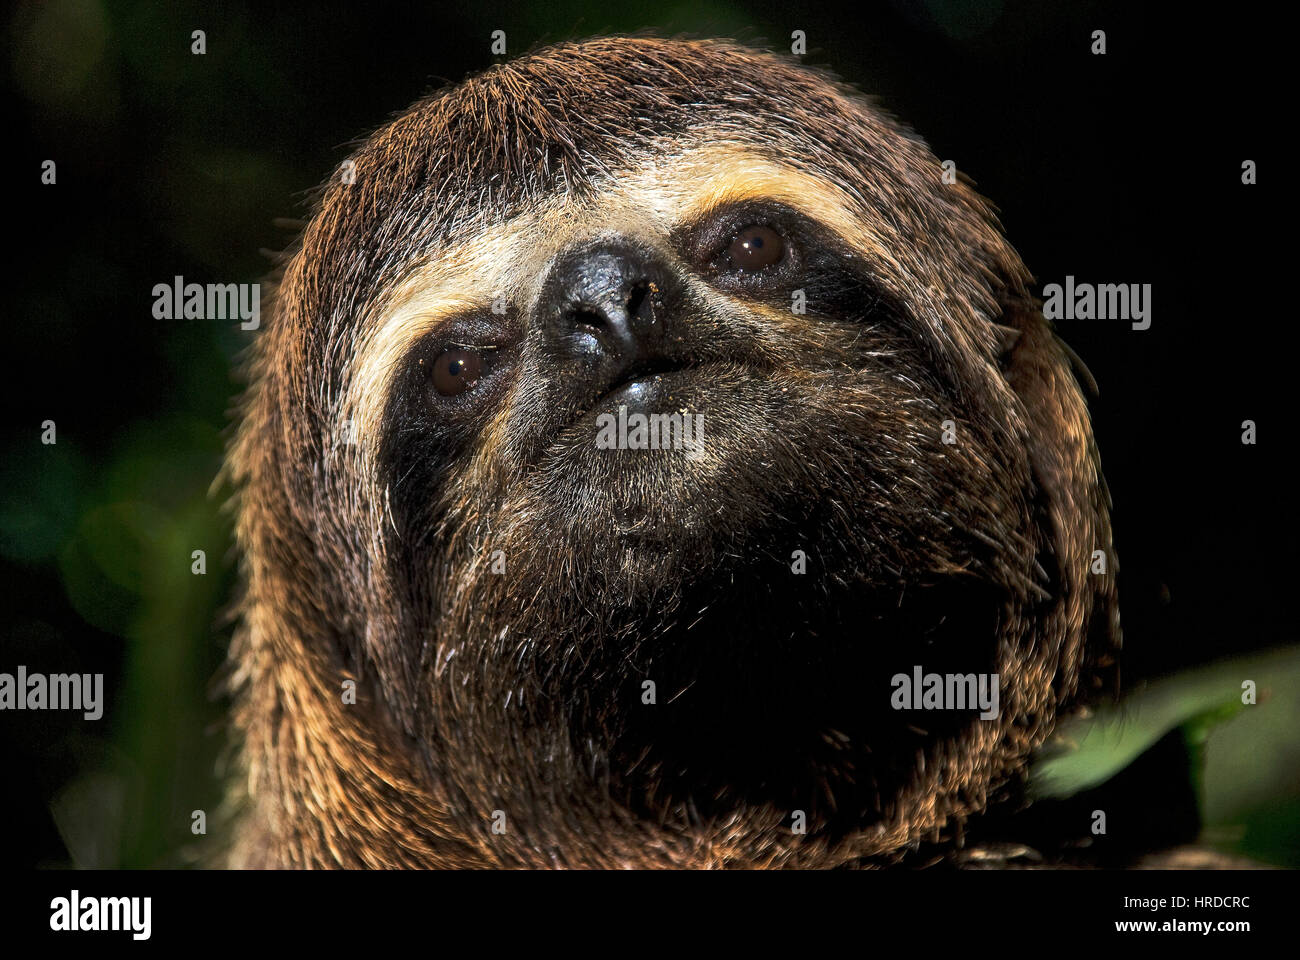 Brown-throated sloth (Bradypus variegatus), photographed in Sooretama, Espírito Santo - Southeast of Brazil. Atlantic Forest Biome. Stock Photo